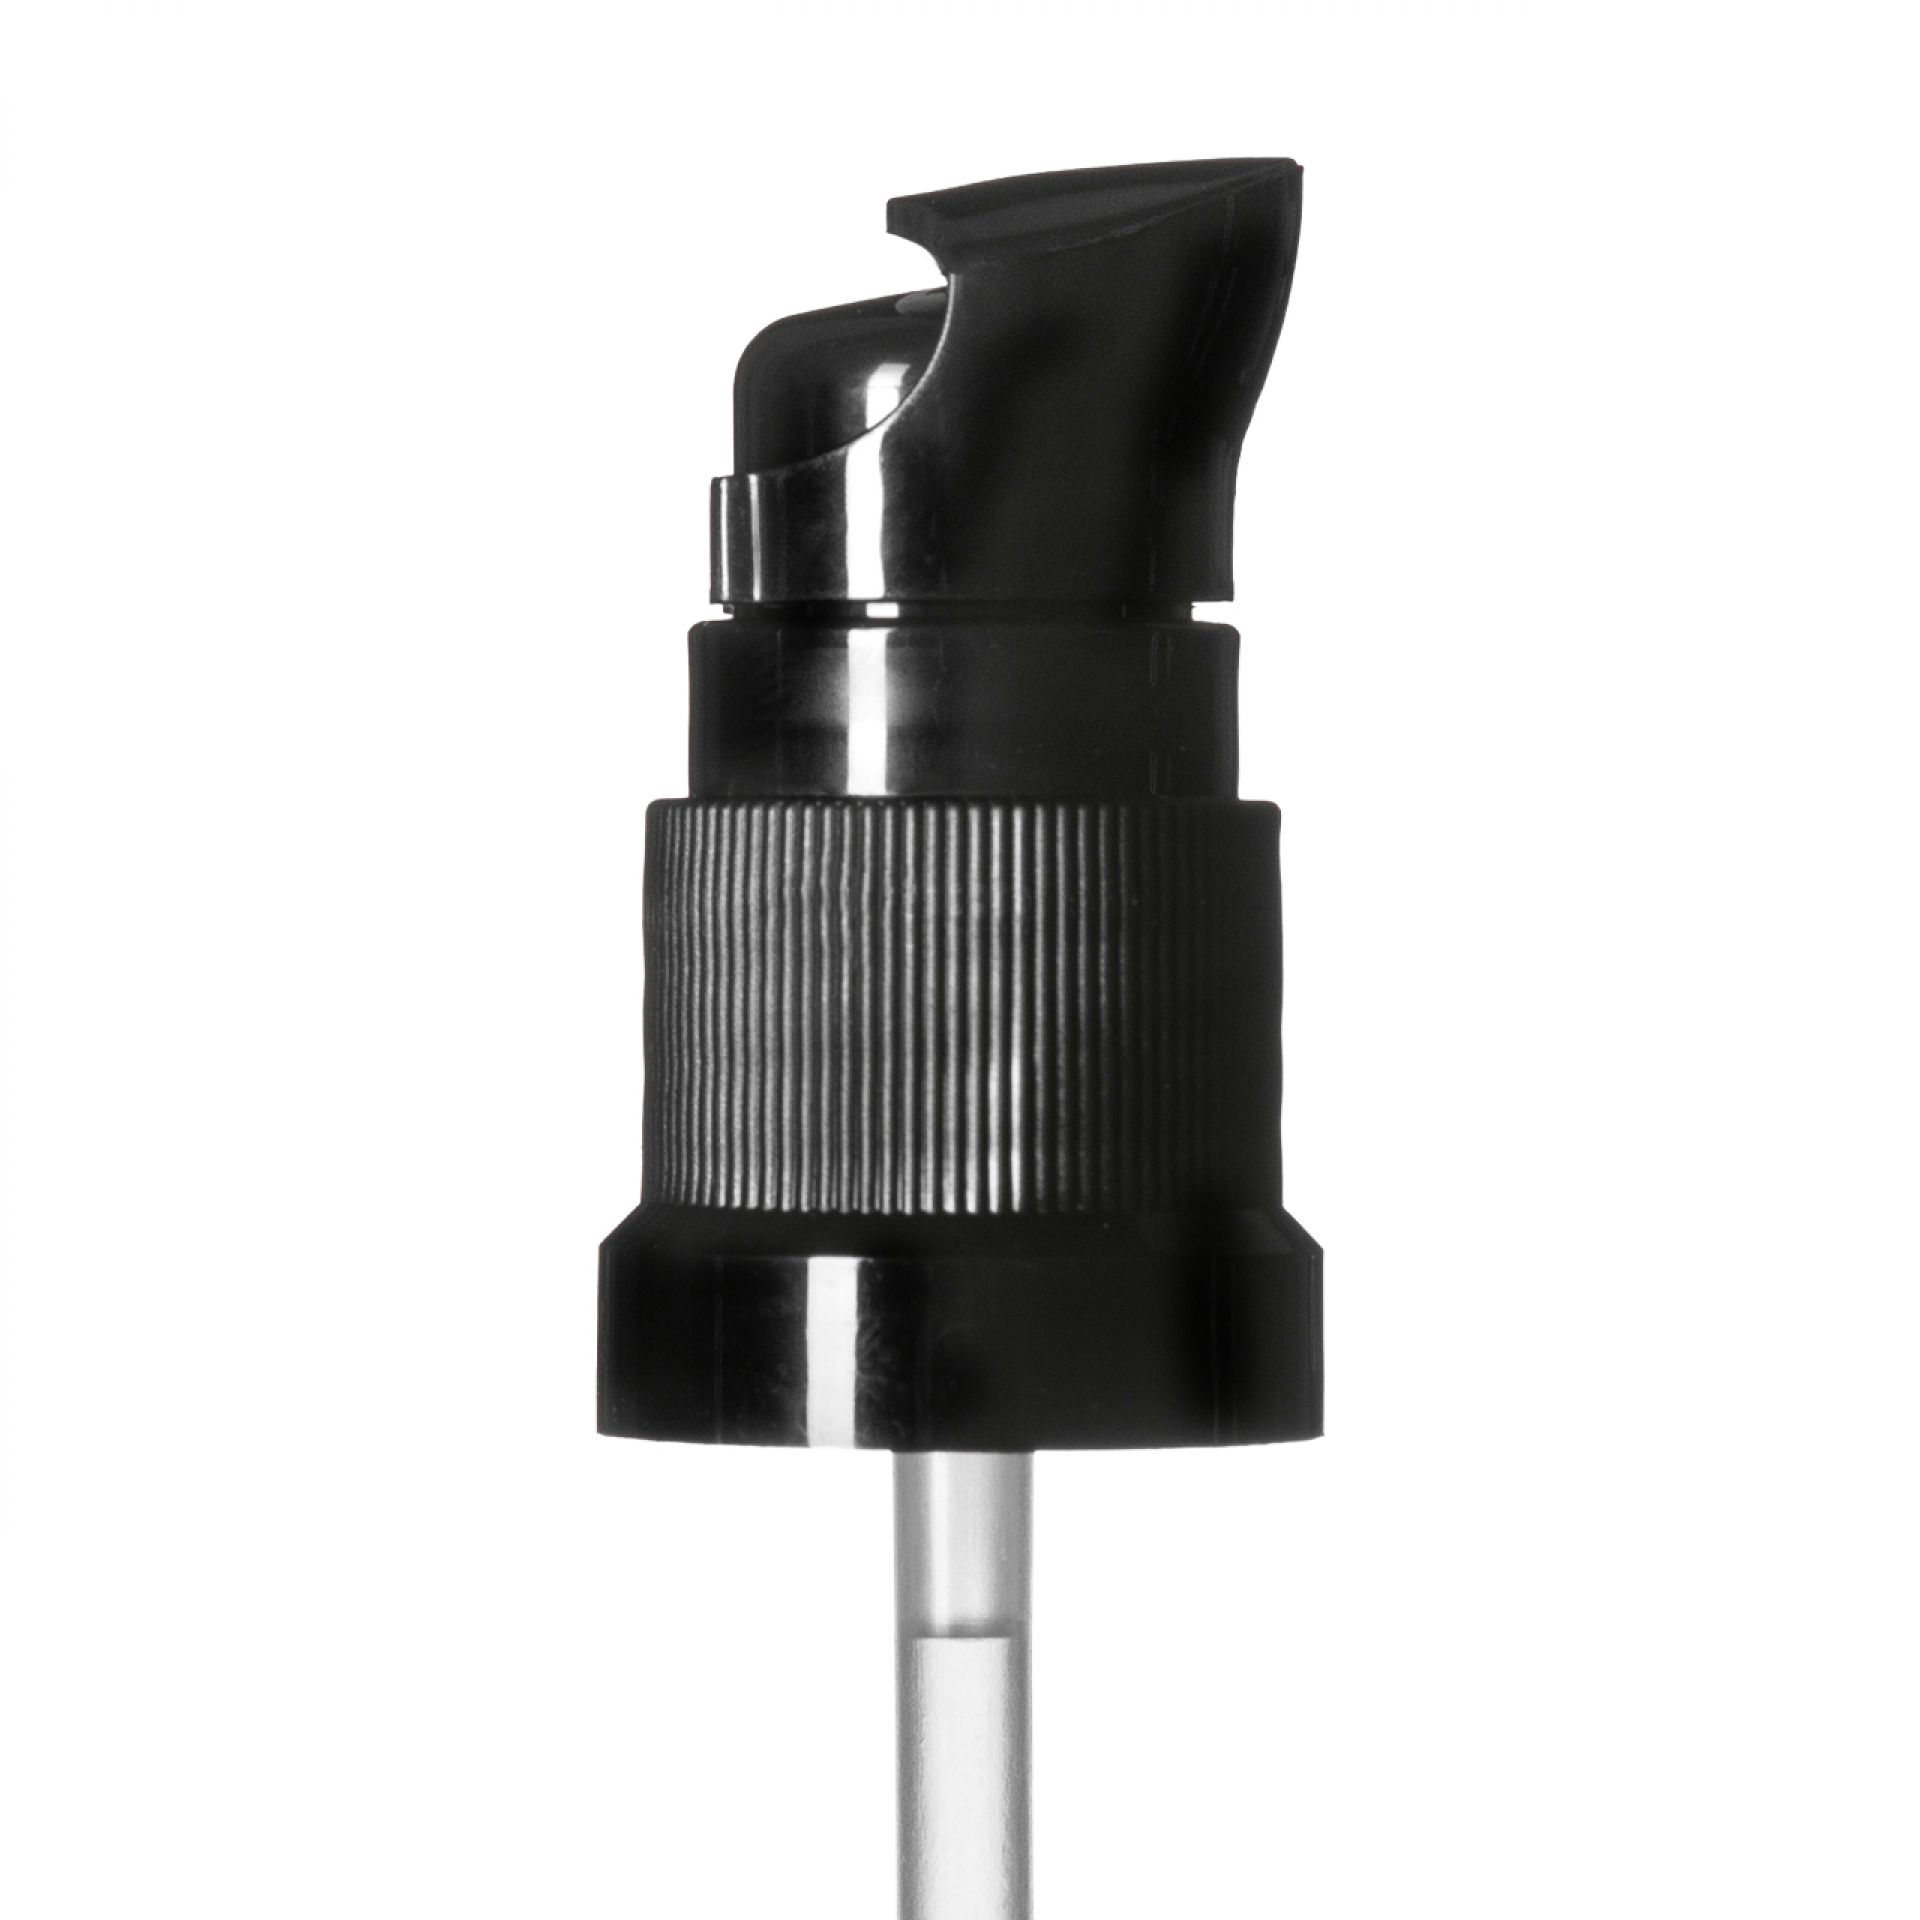 Lotion pump Metropolitan DIN18, PP, black, dose 0.14ml, black security clip (Orion 50)